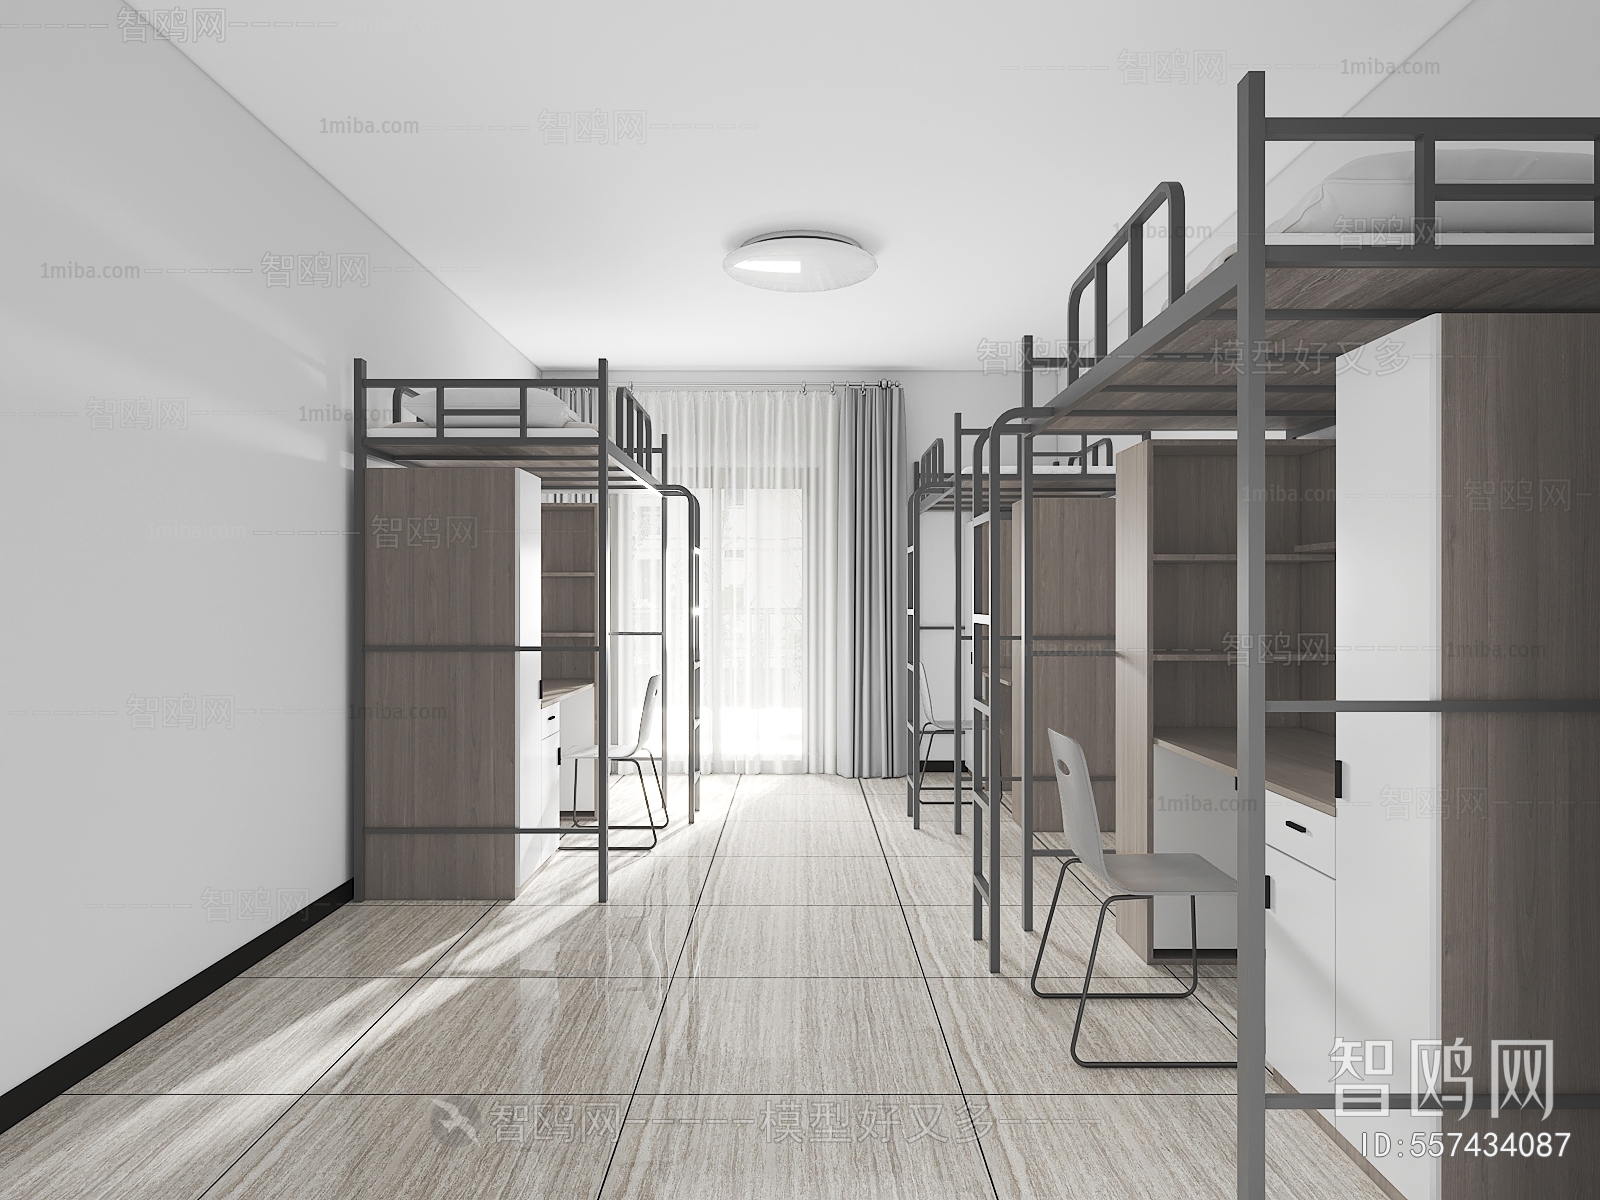 Modern Dormitory